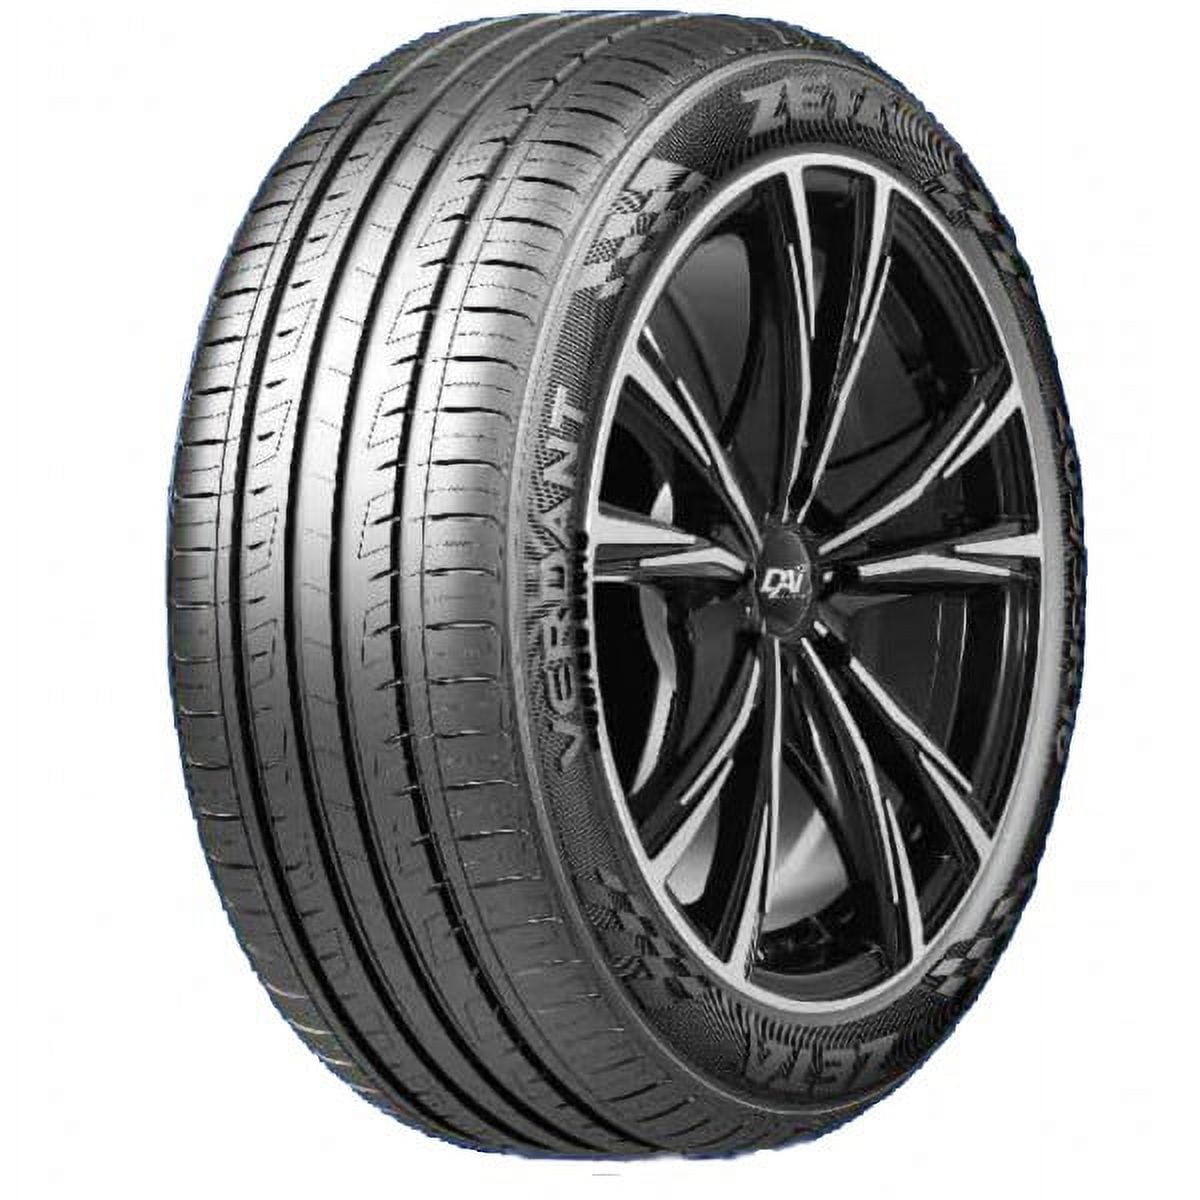 Goodyear Assurance Fuel Max 185/65R15 88 H Tire Fits: 2017 Hyundai Accent  LE, 2013-14 Honda Fit EV